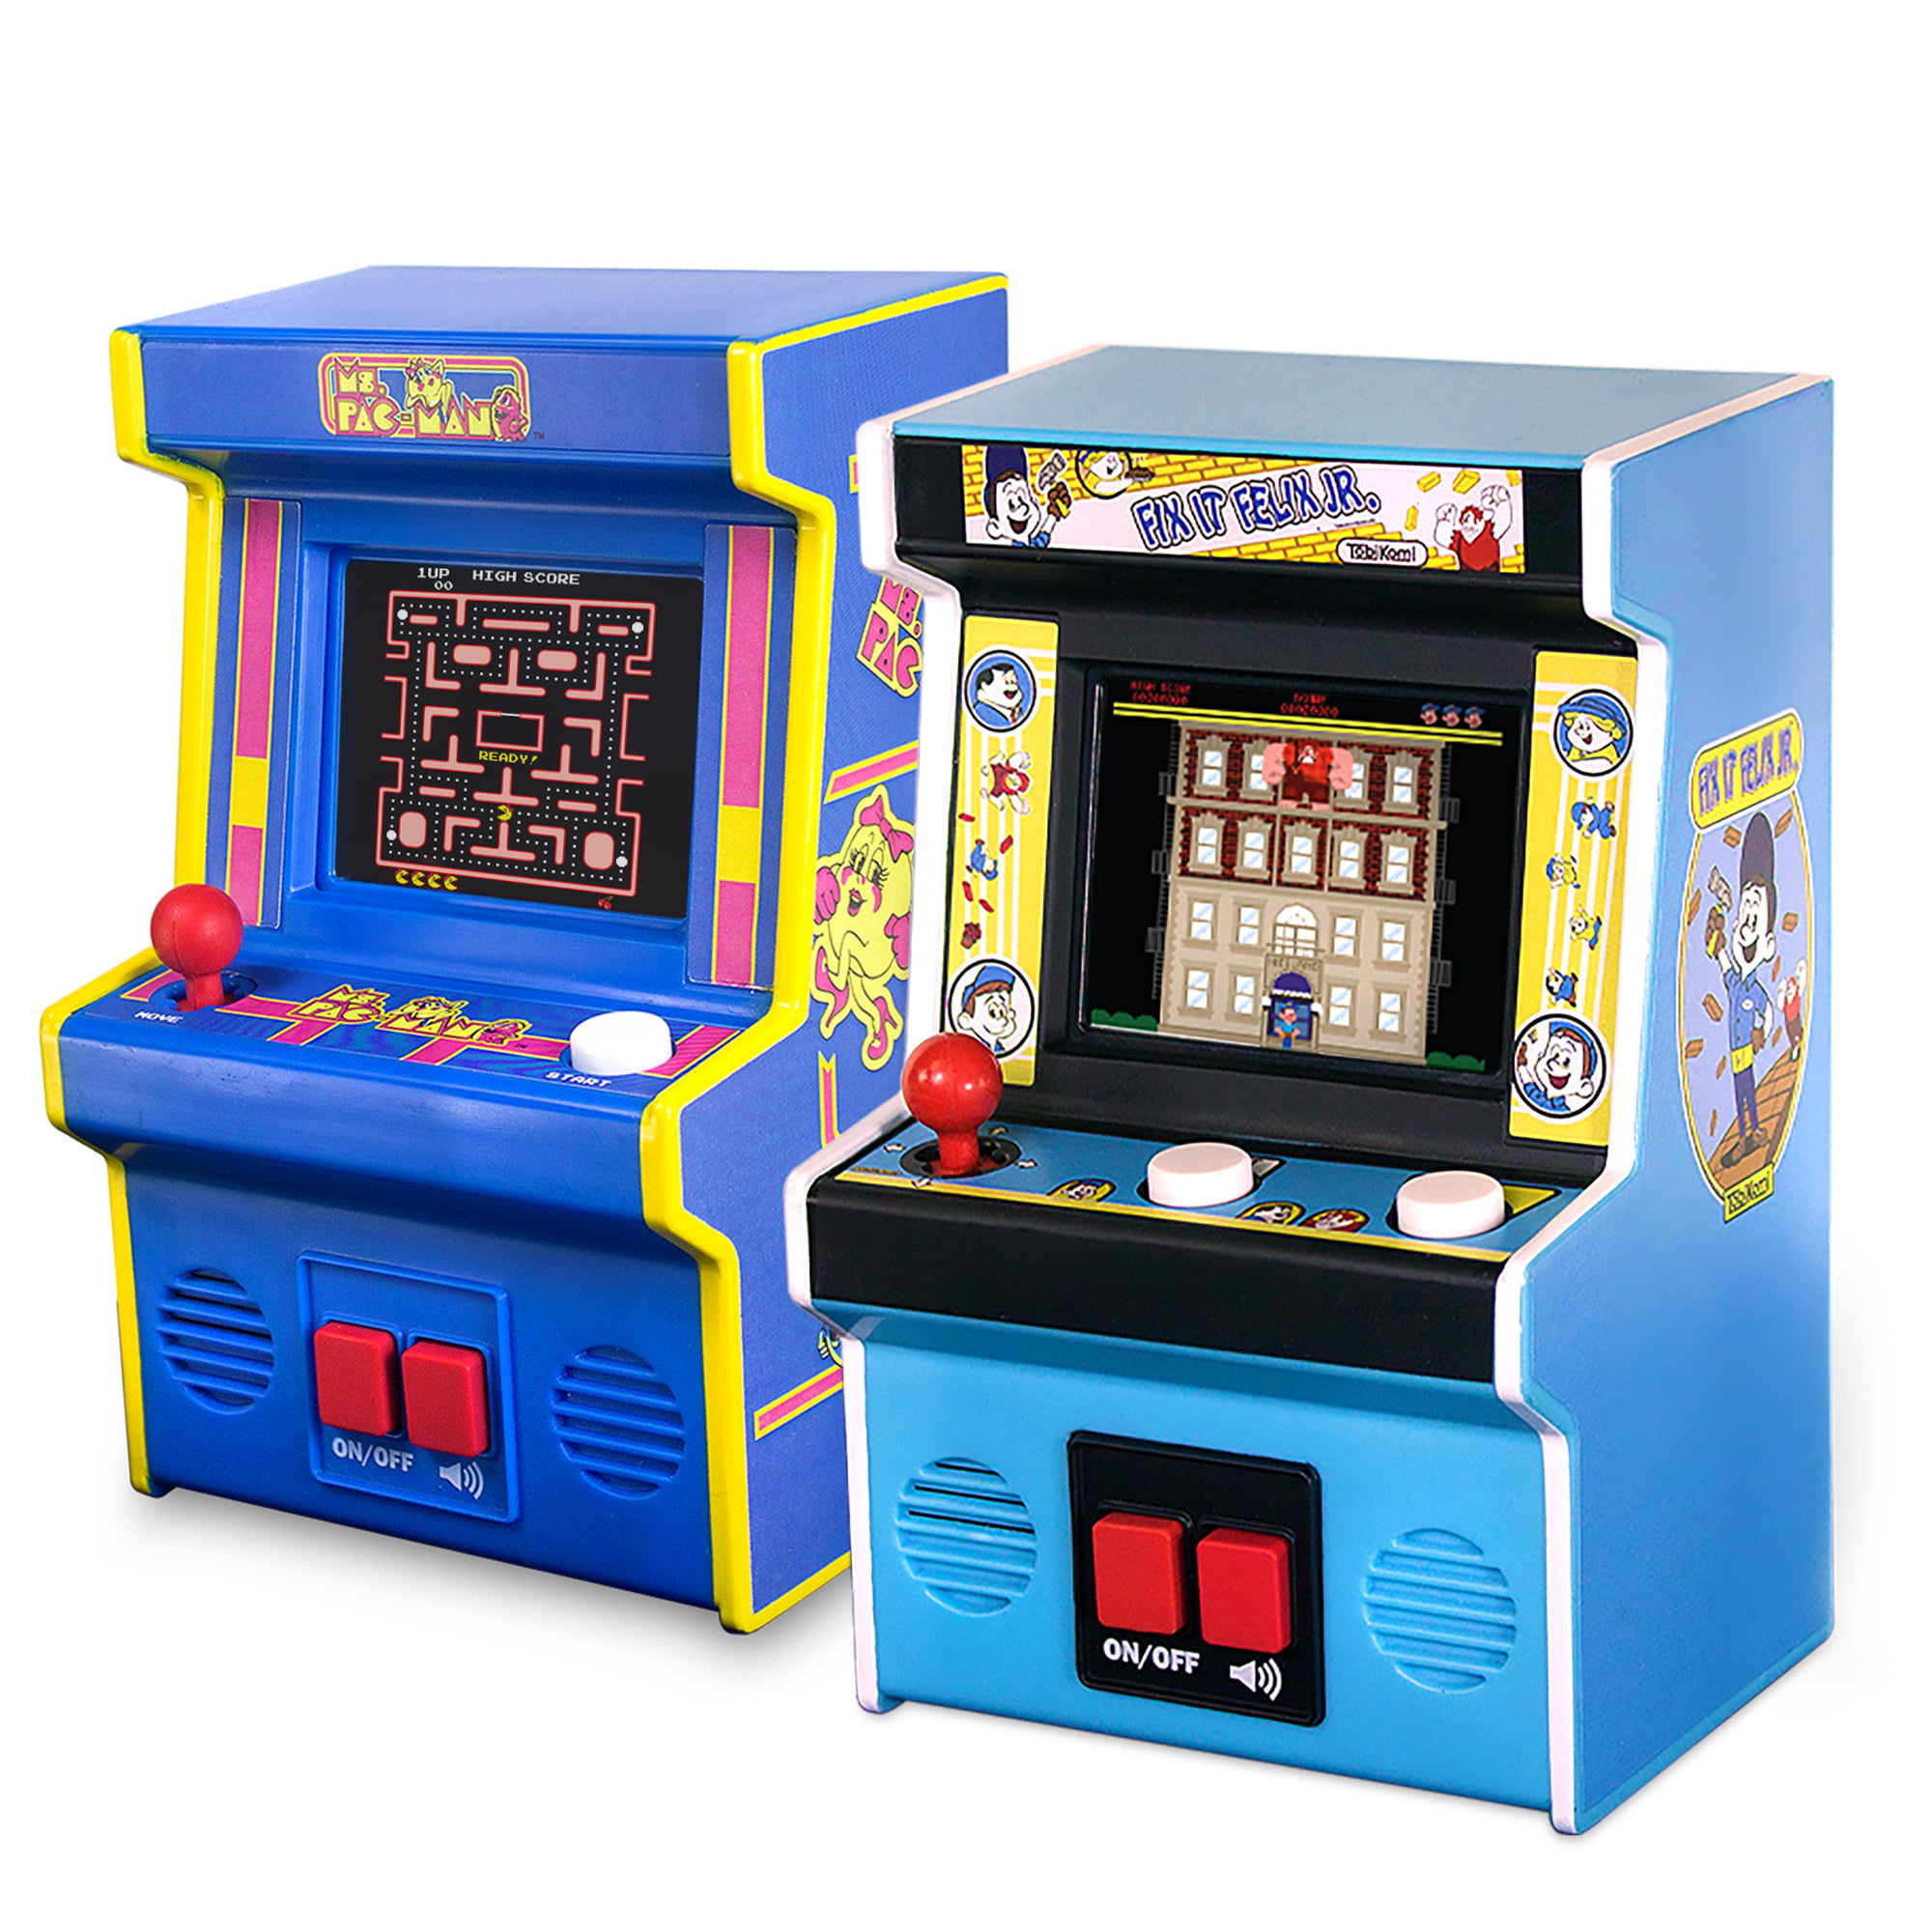 Fix It Felix Mini Arcade Game Wreck it Ralph Fun Portable Video Game Child Gift 